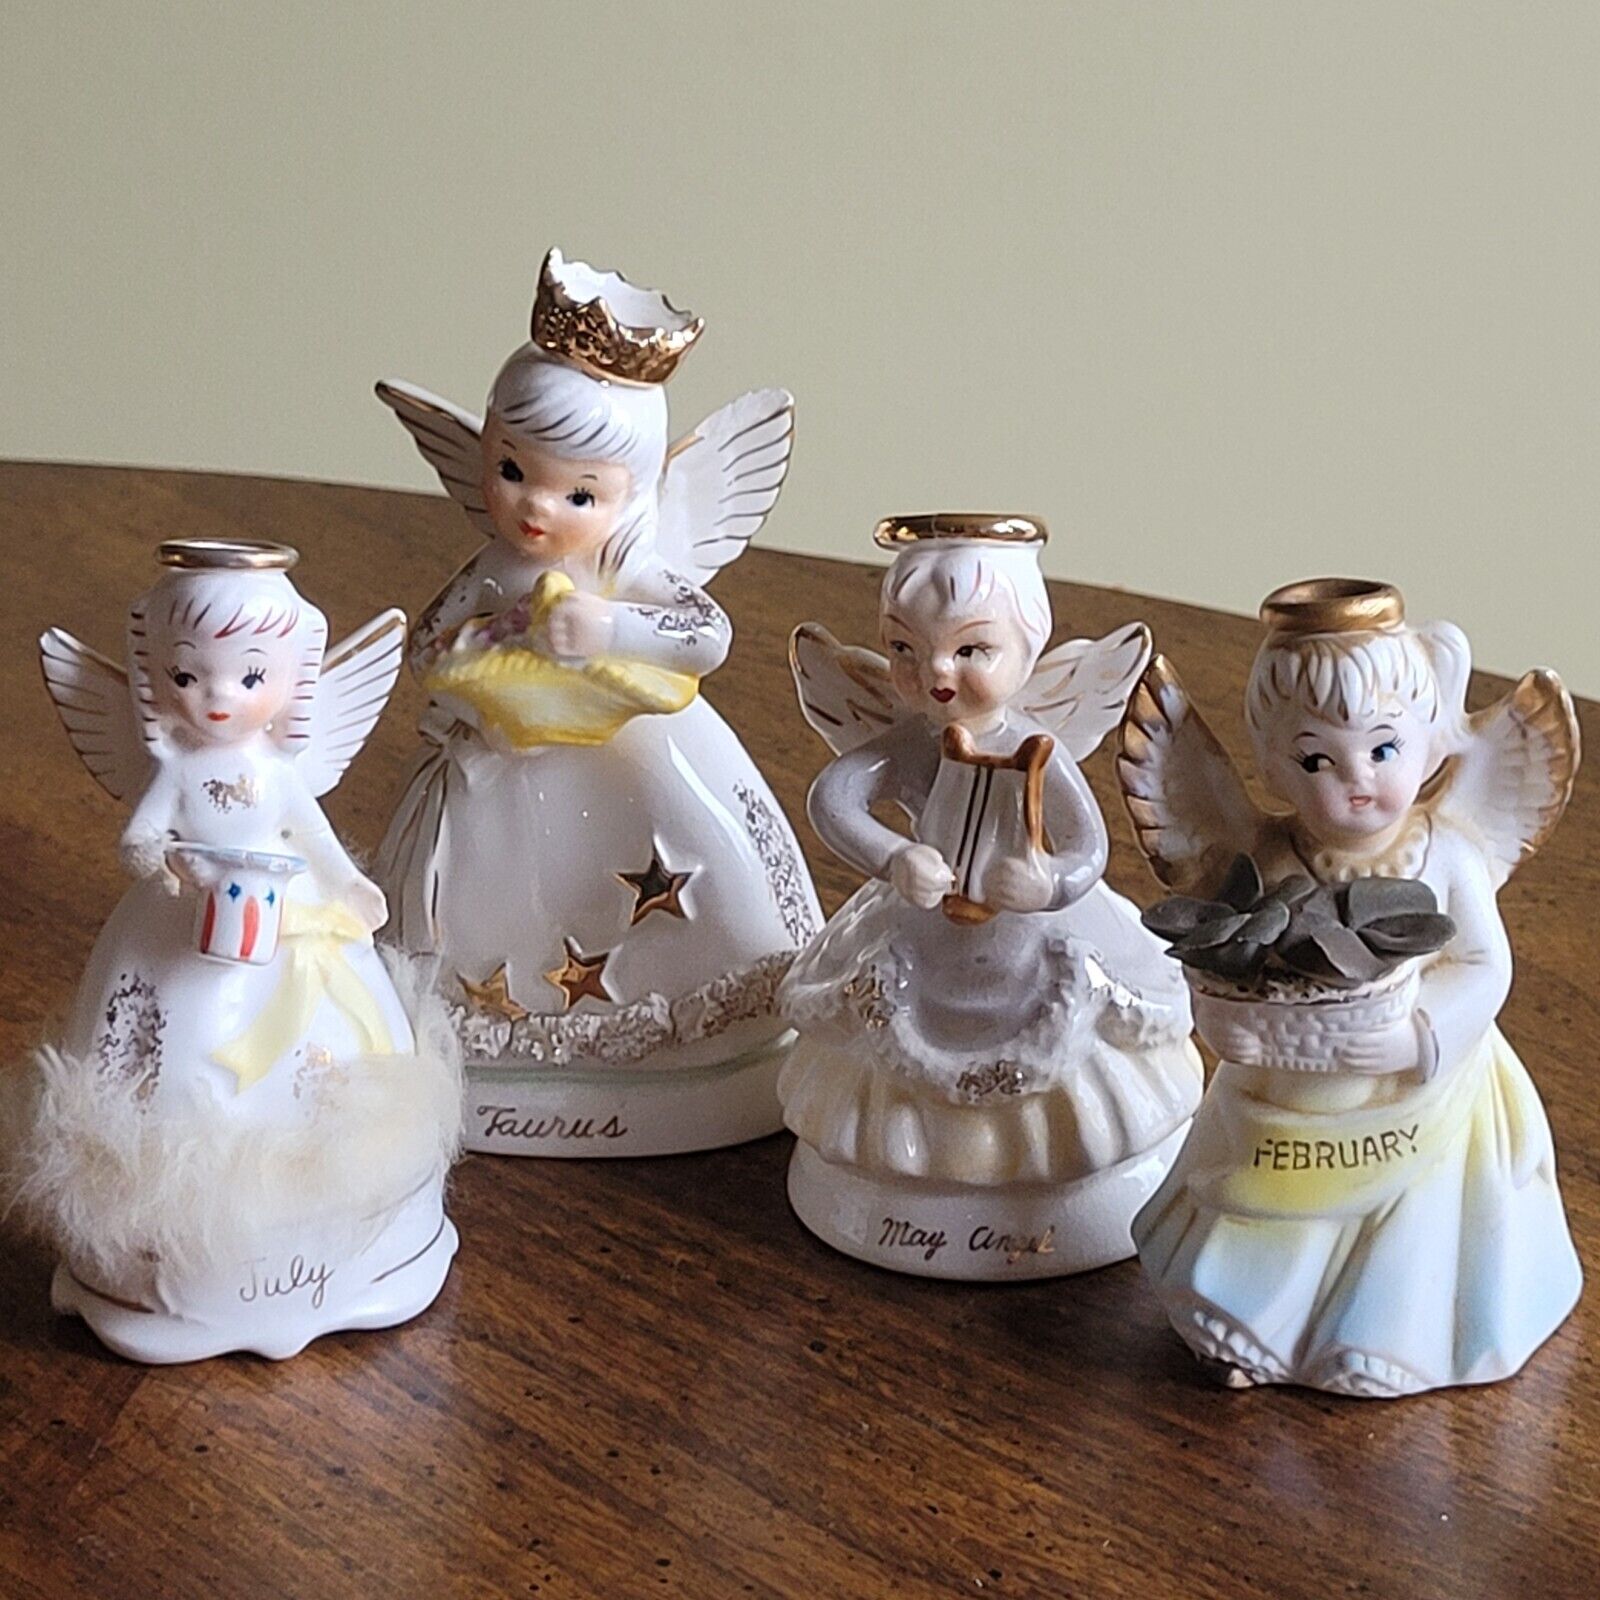 4 Vintage Birthday Angels, Taurus, May, July, February / ALL DAMAGED, REPAIRS